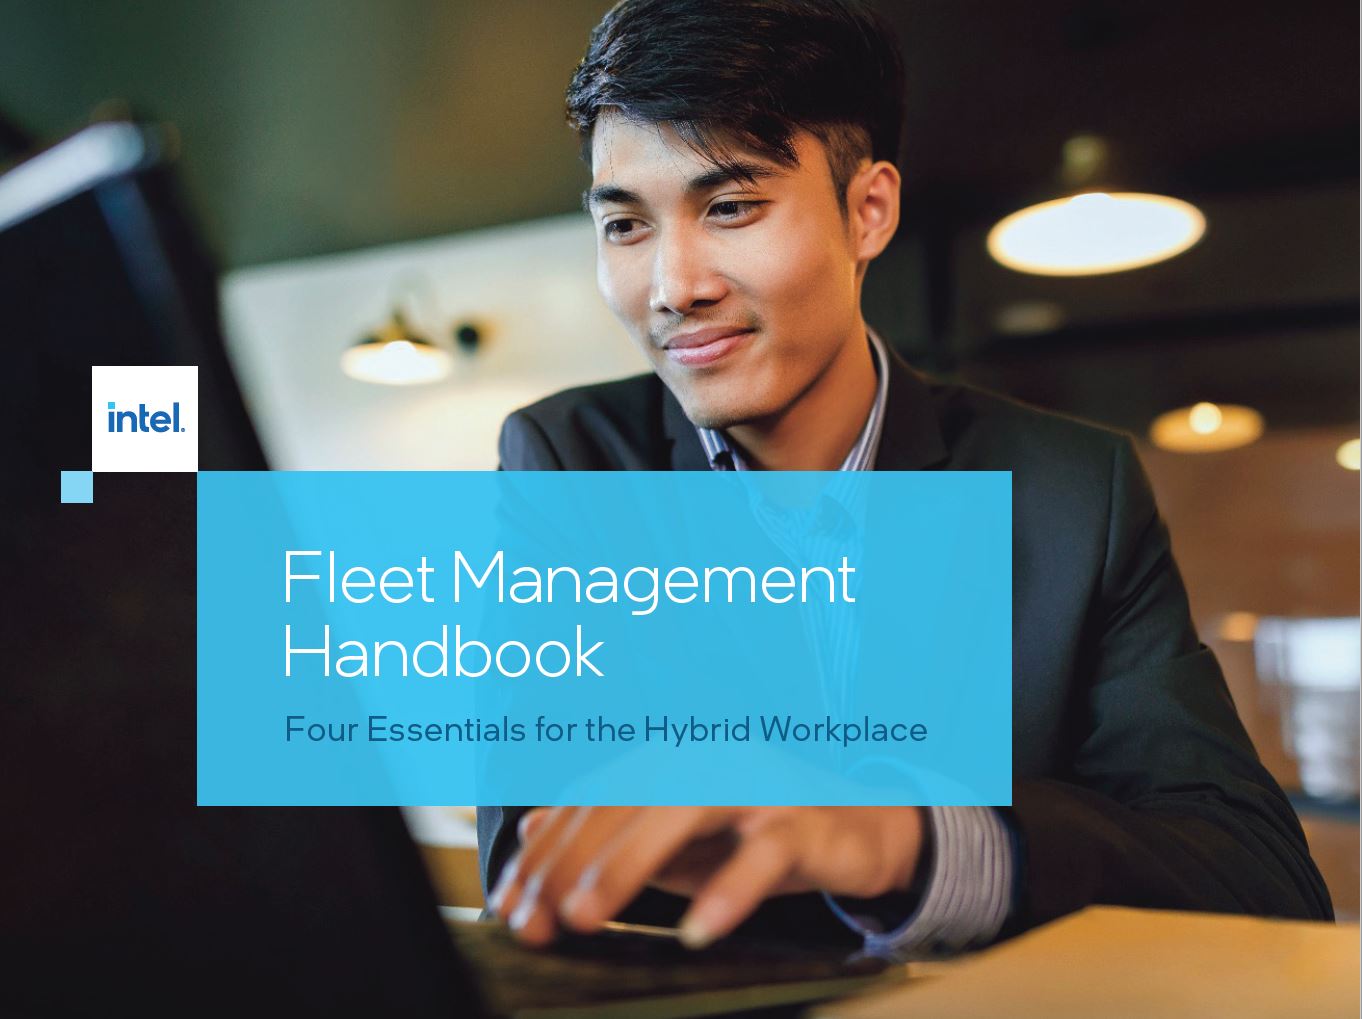 Get the Fleet Management Handbook for the Hybrid Workplace